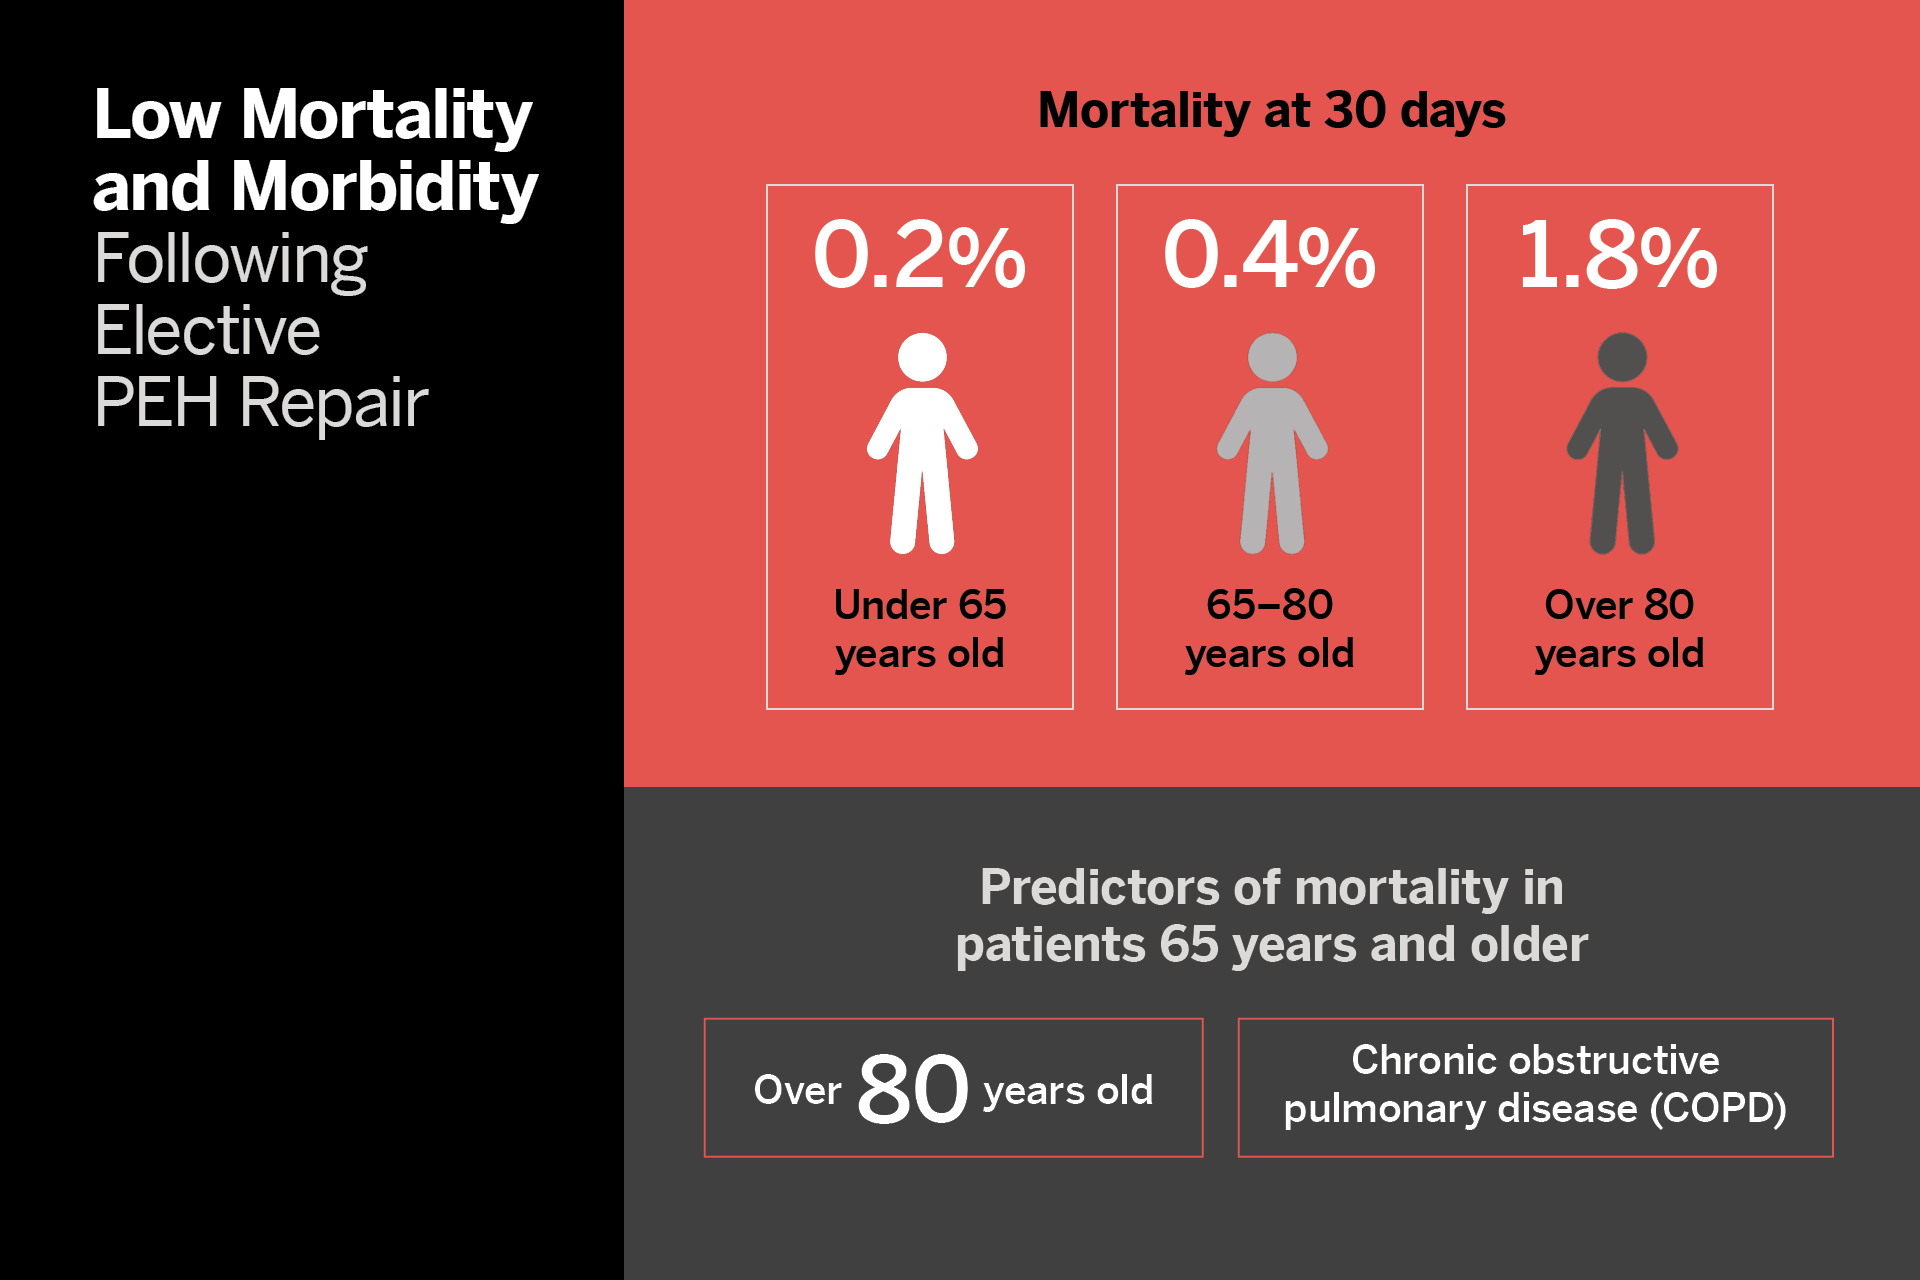 mortality rates 30 days after PEH repair